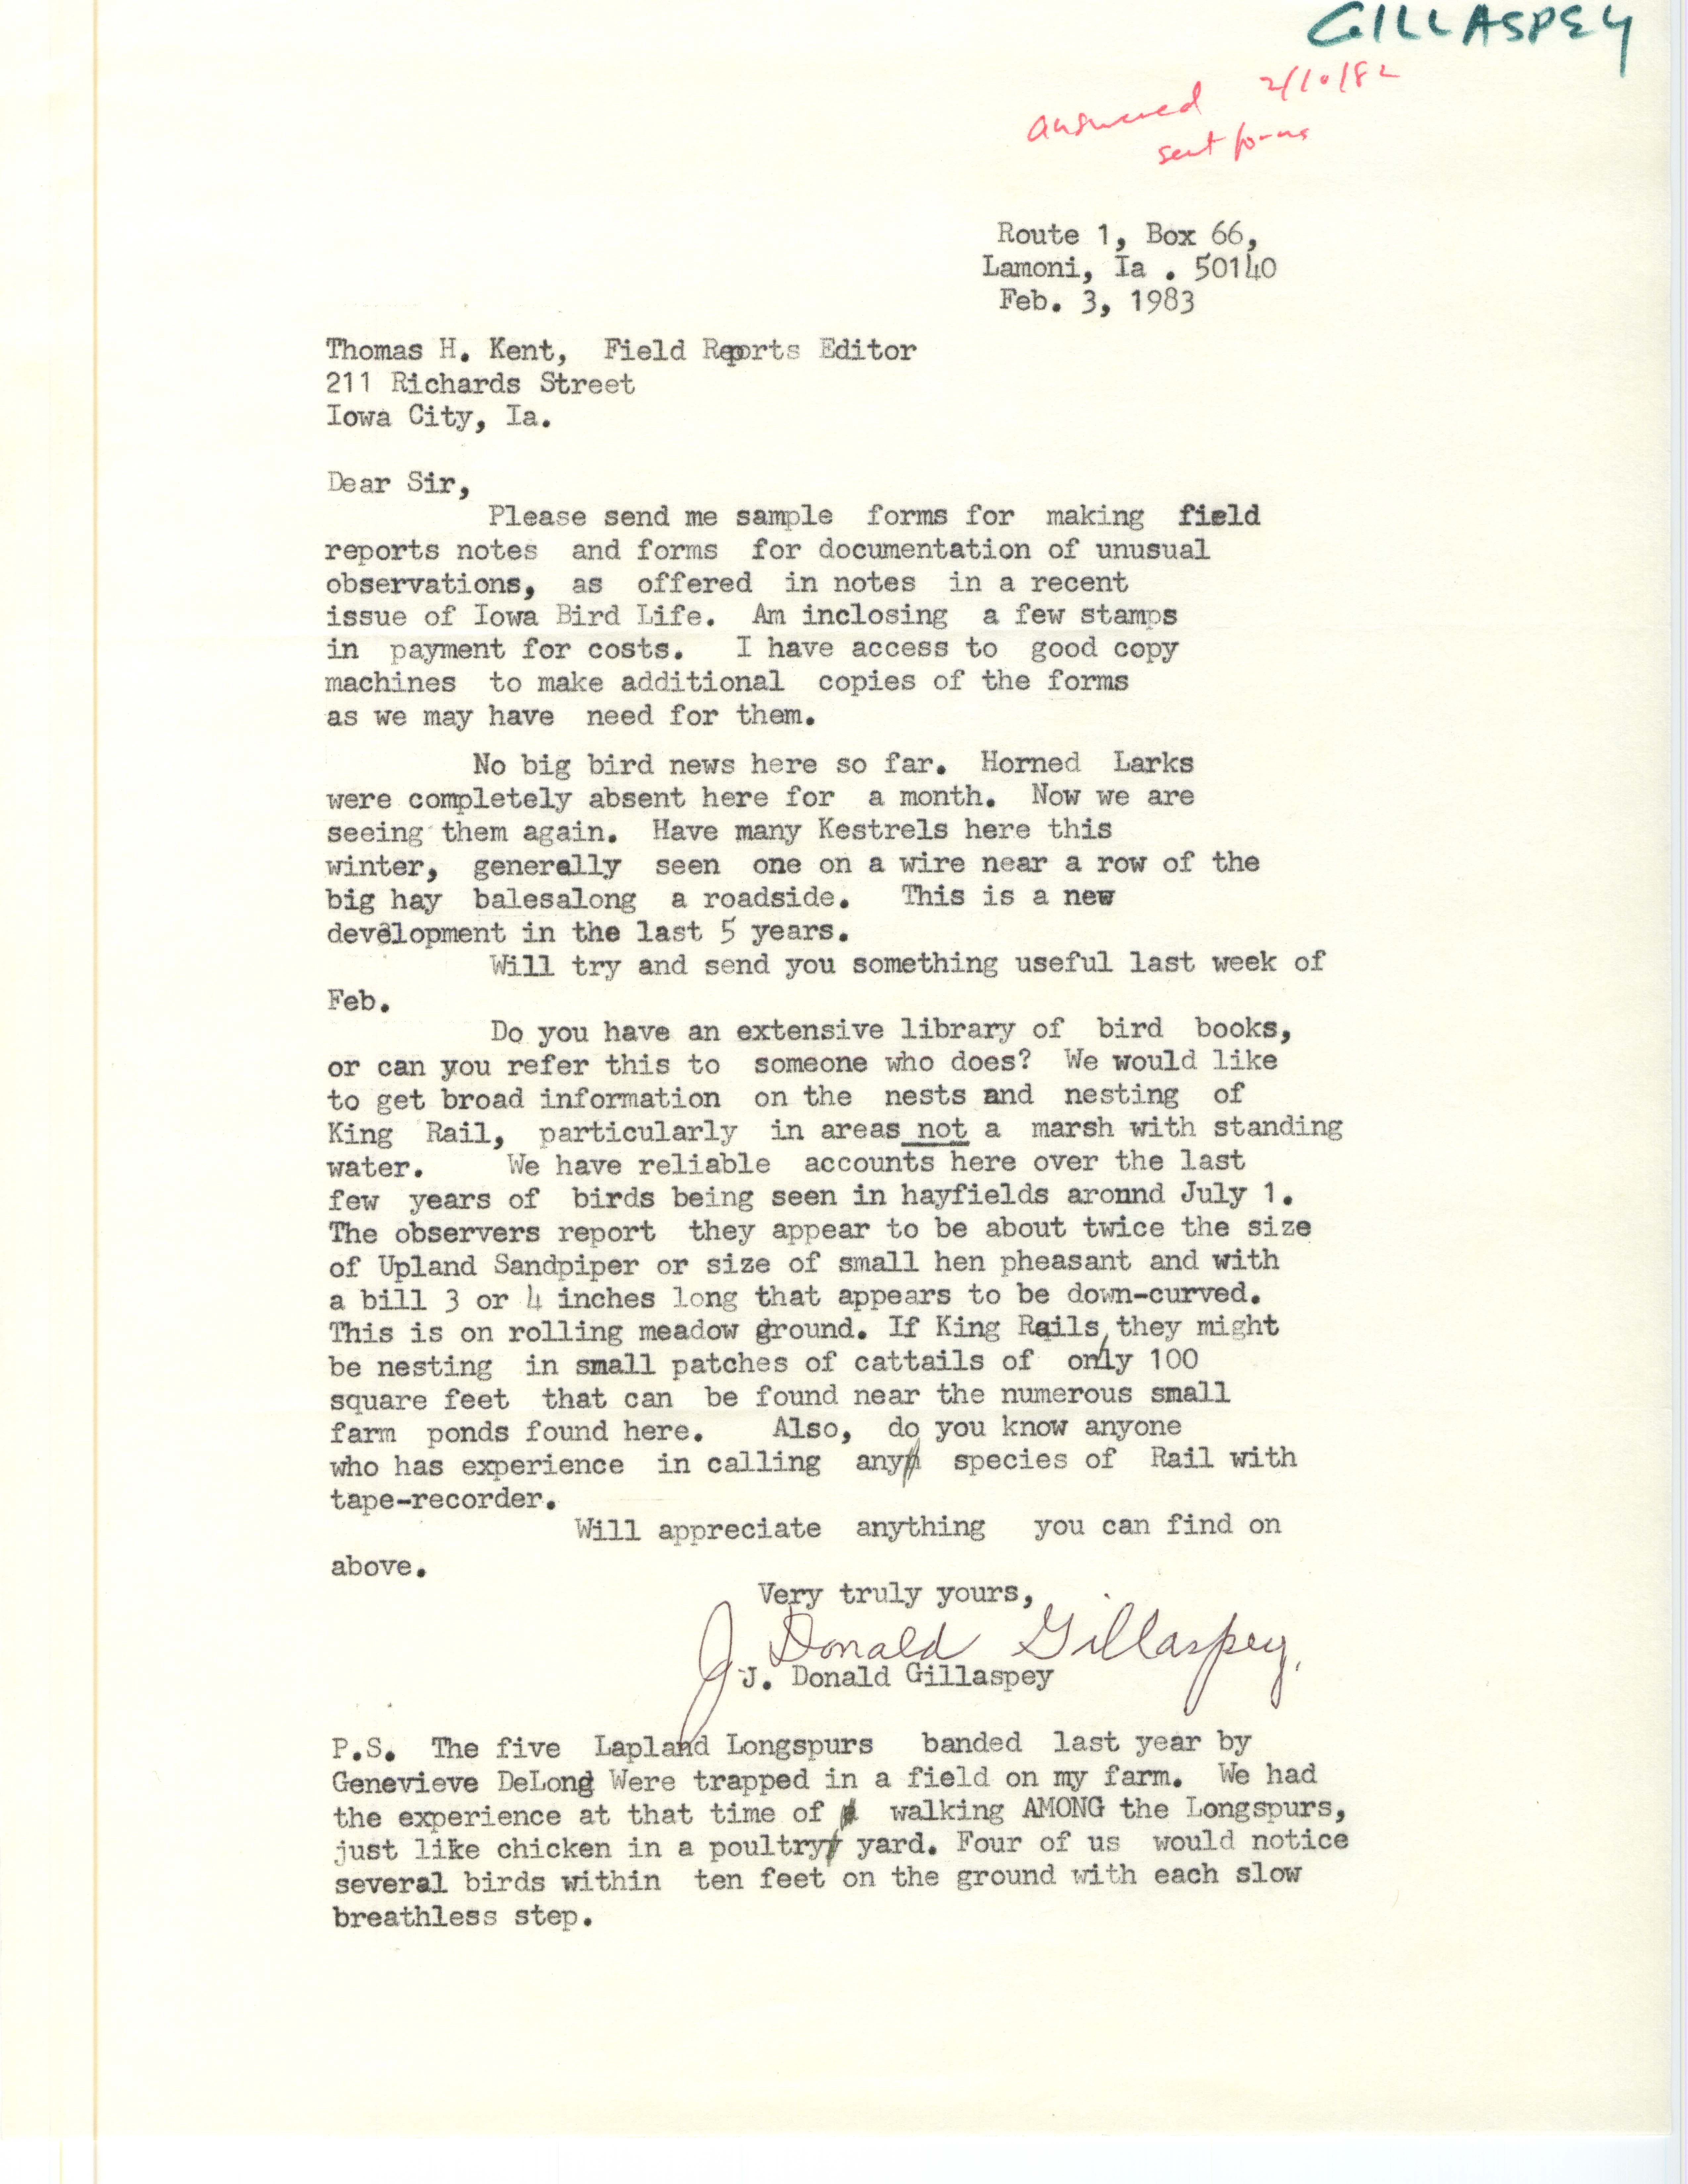 J. Donald Gillaspey letter to Thomas H. Kent regarding winter bird sightings, February 3, 1983